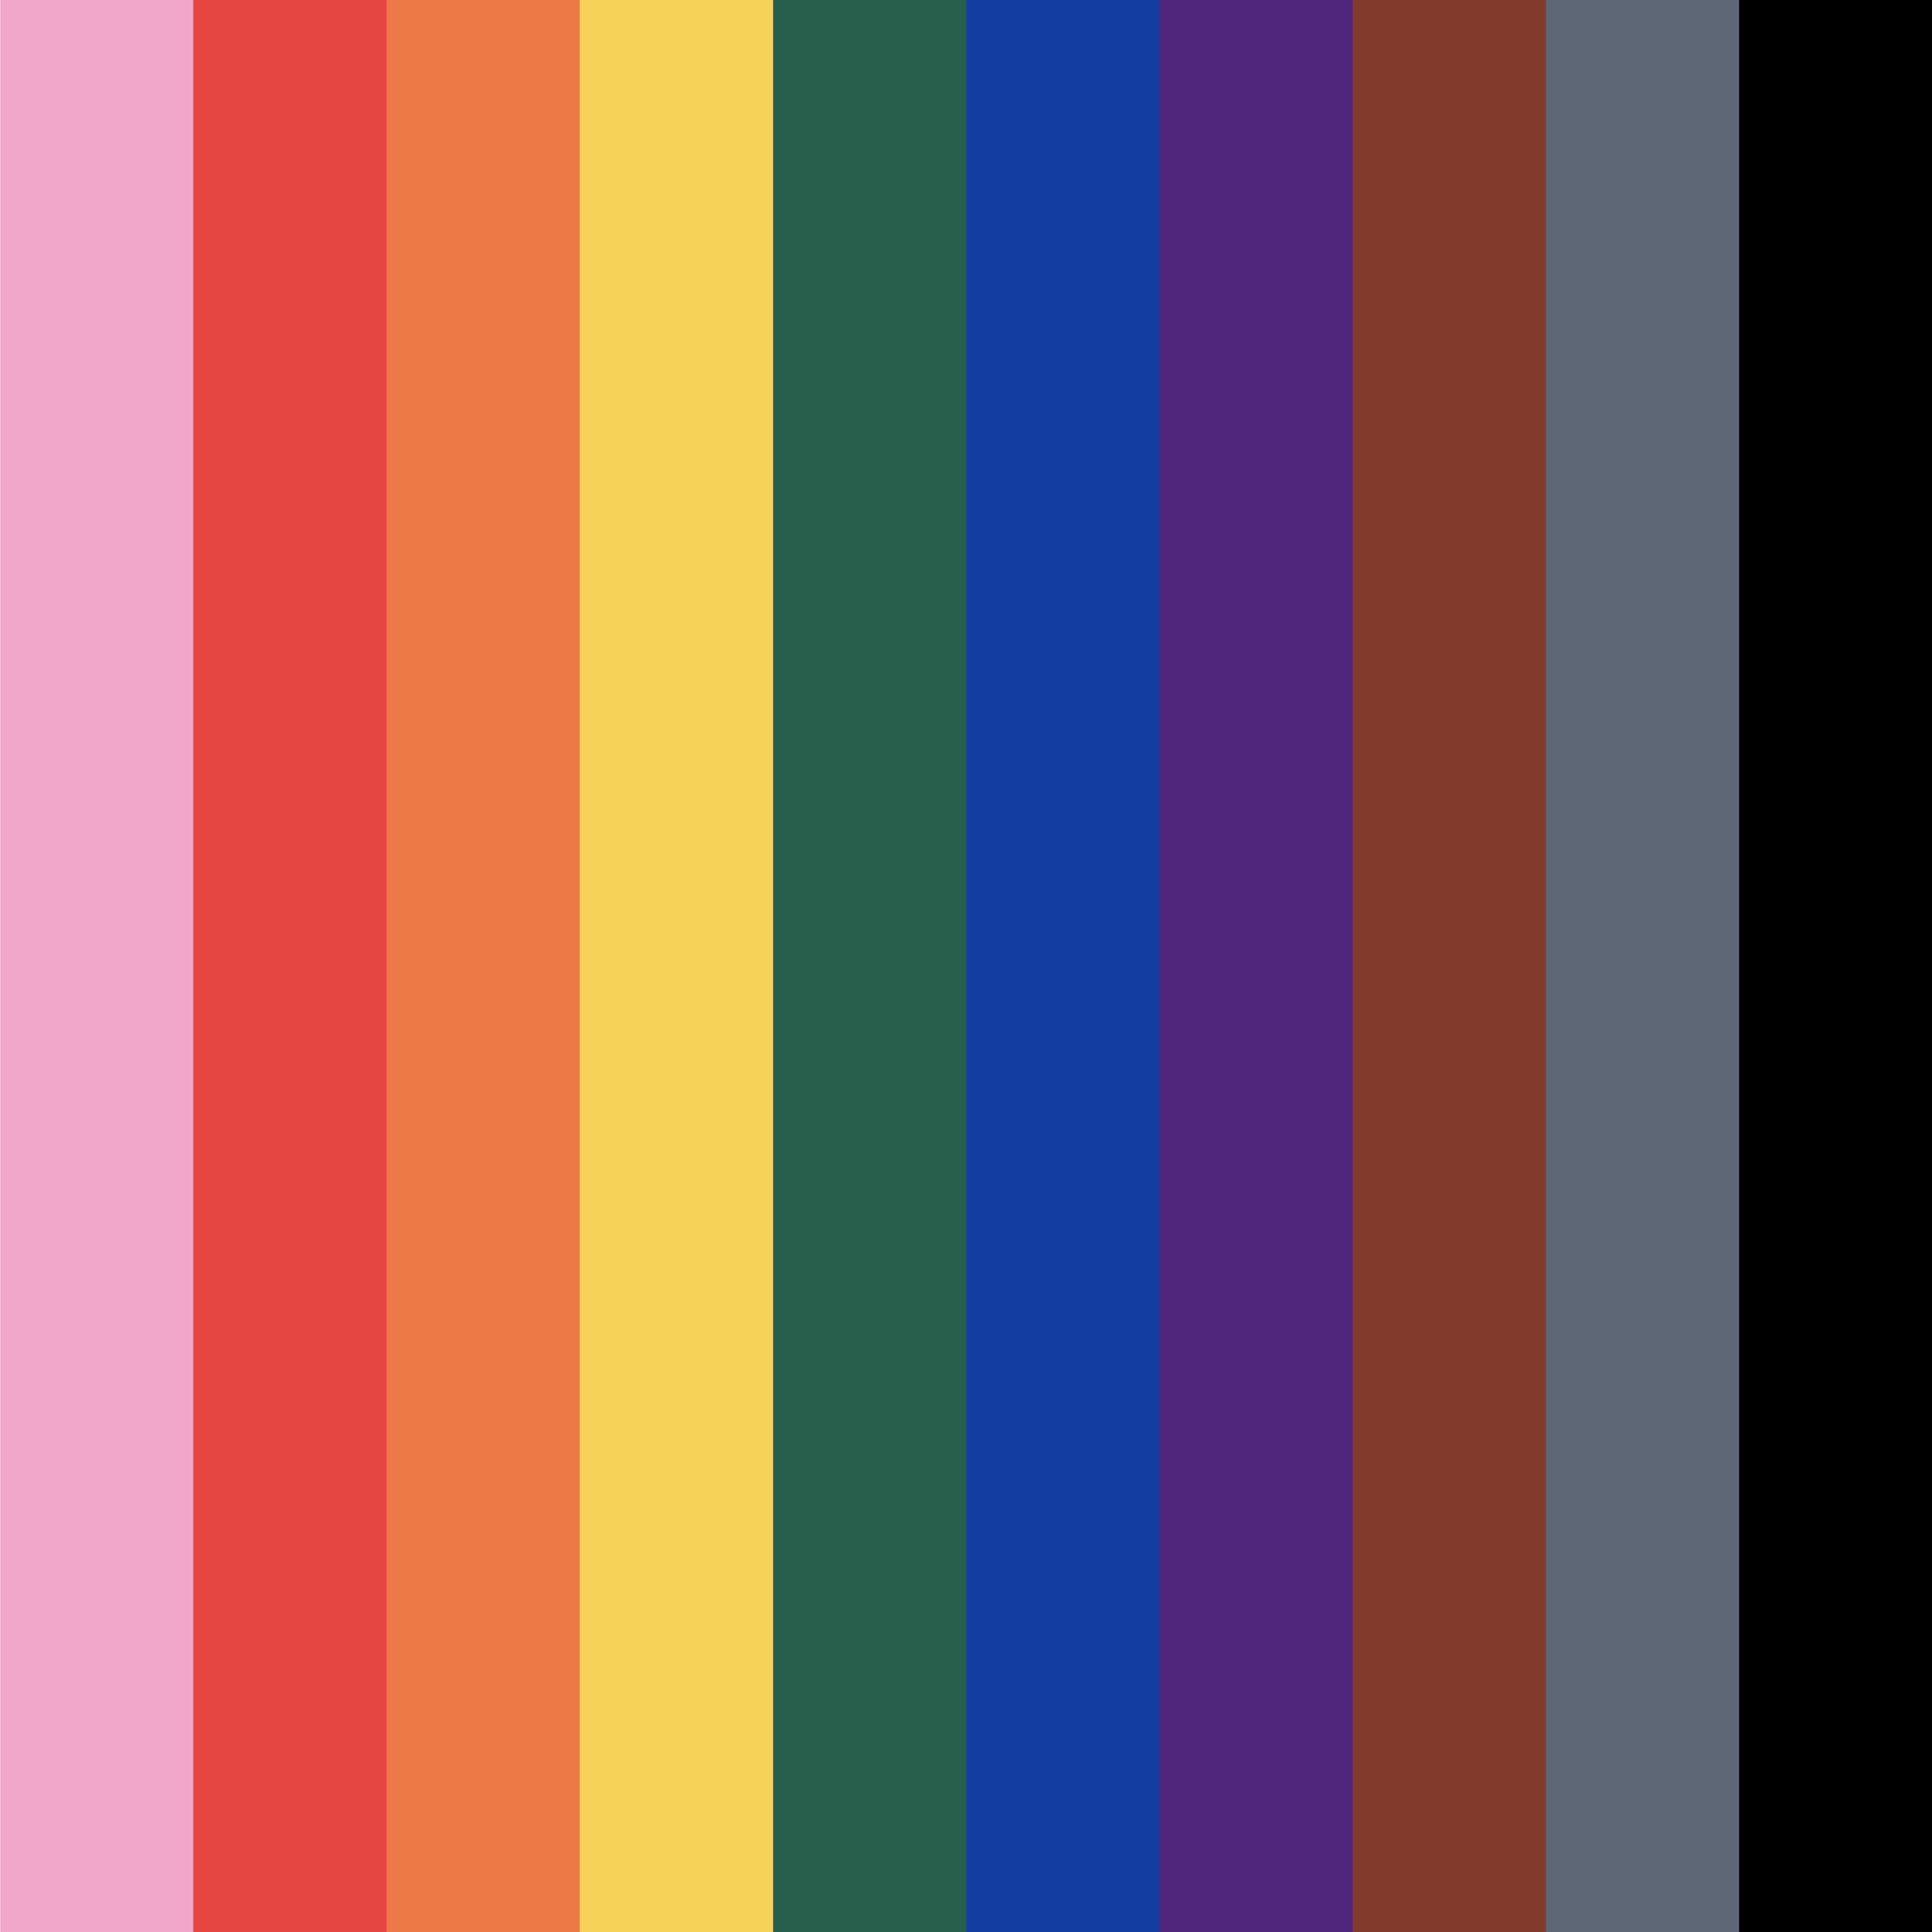 Tulip Brush-On Fabric Paint Rainbow 1 fl. oz. 10 Pack – Tulip